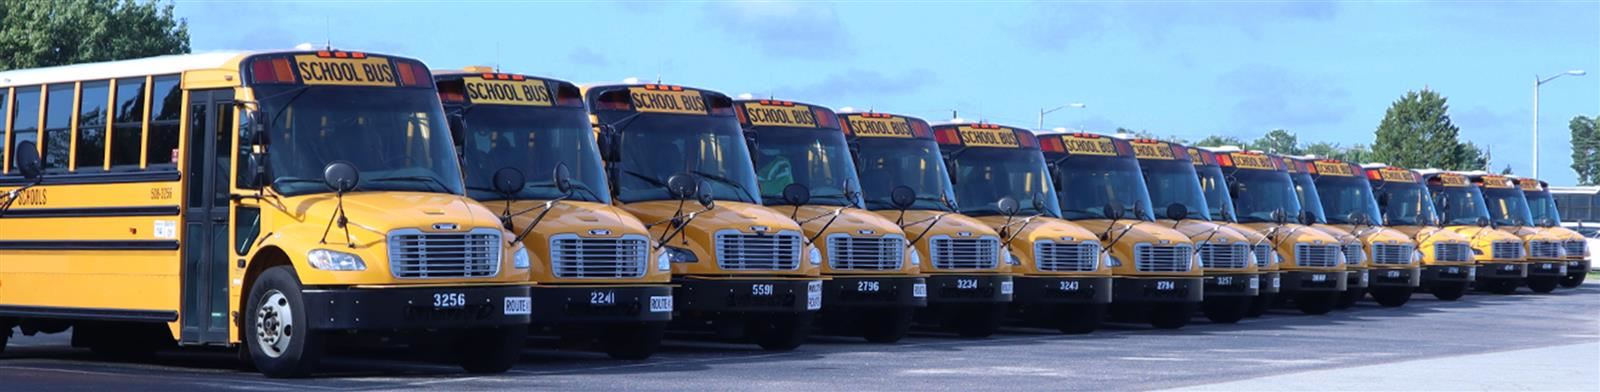 School buses at transportation headquarters